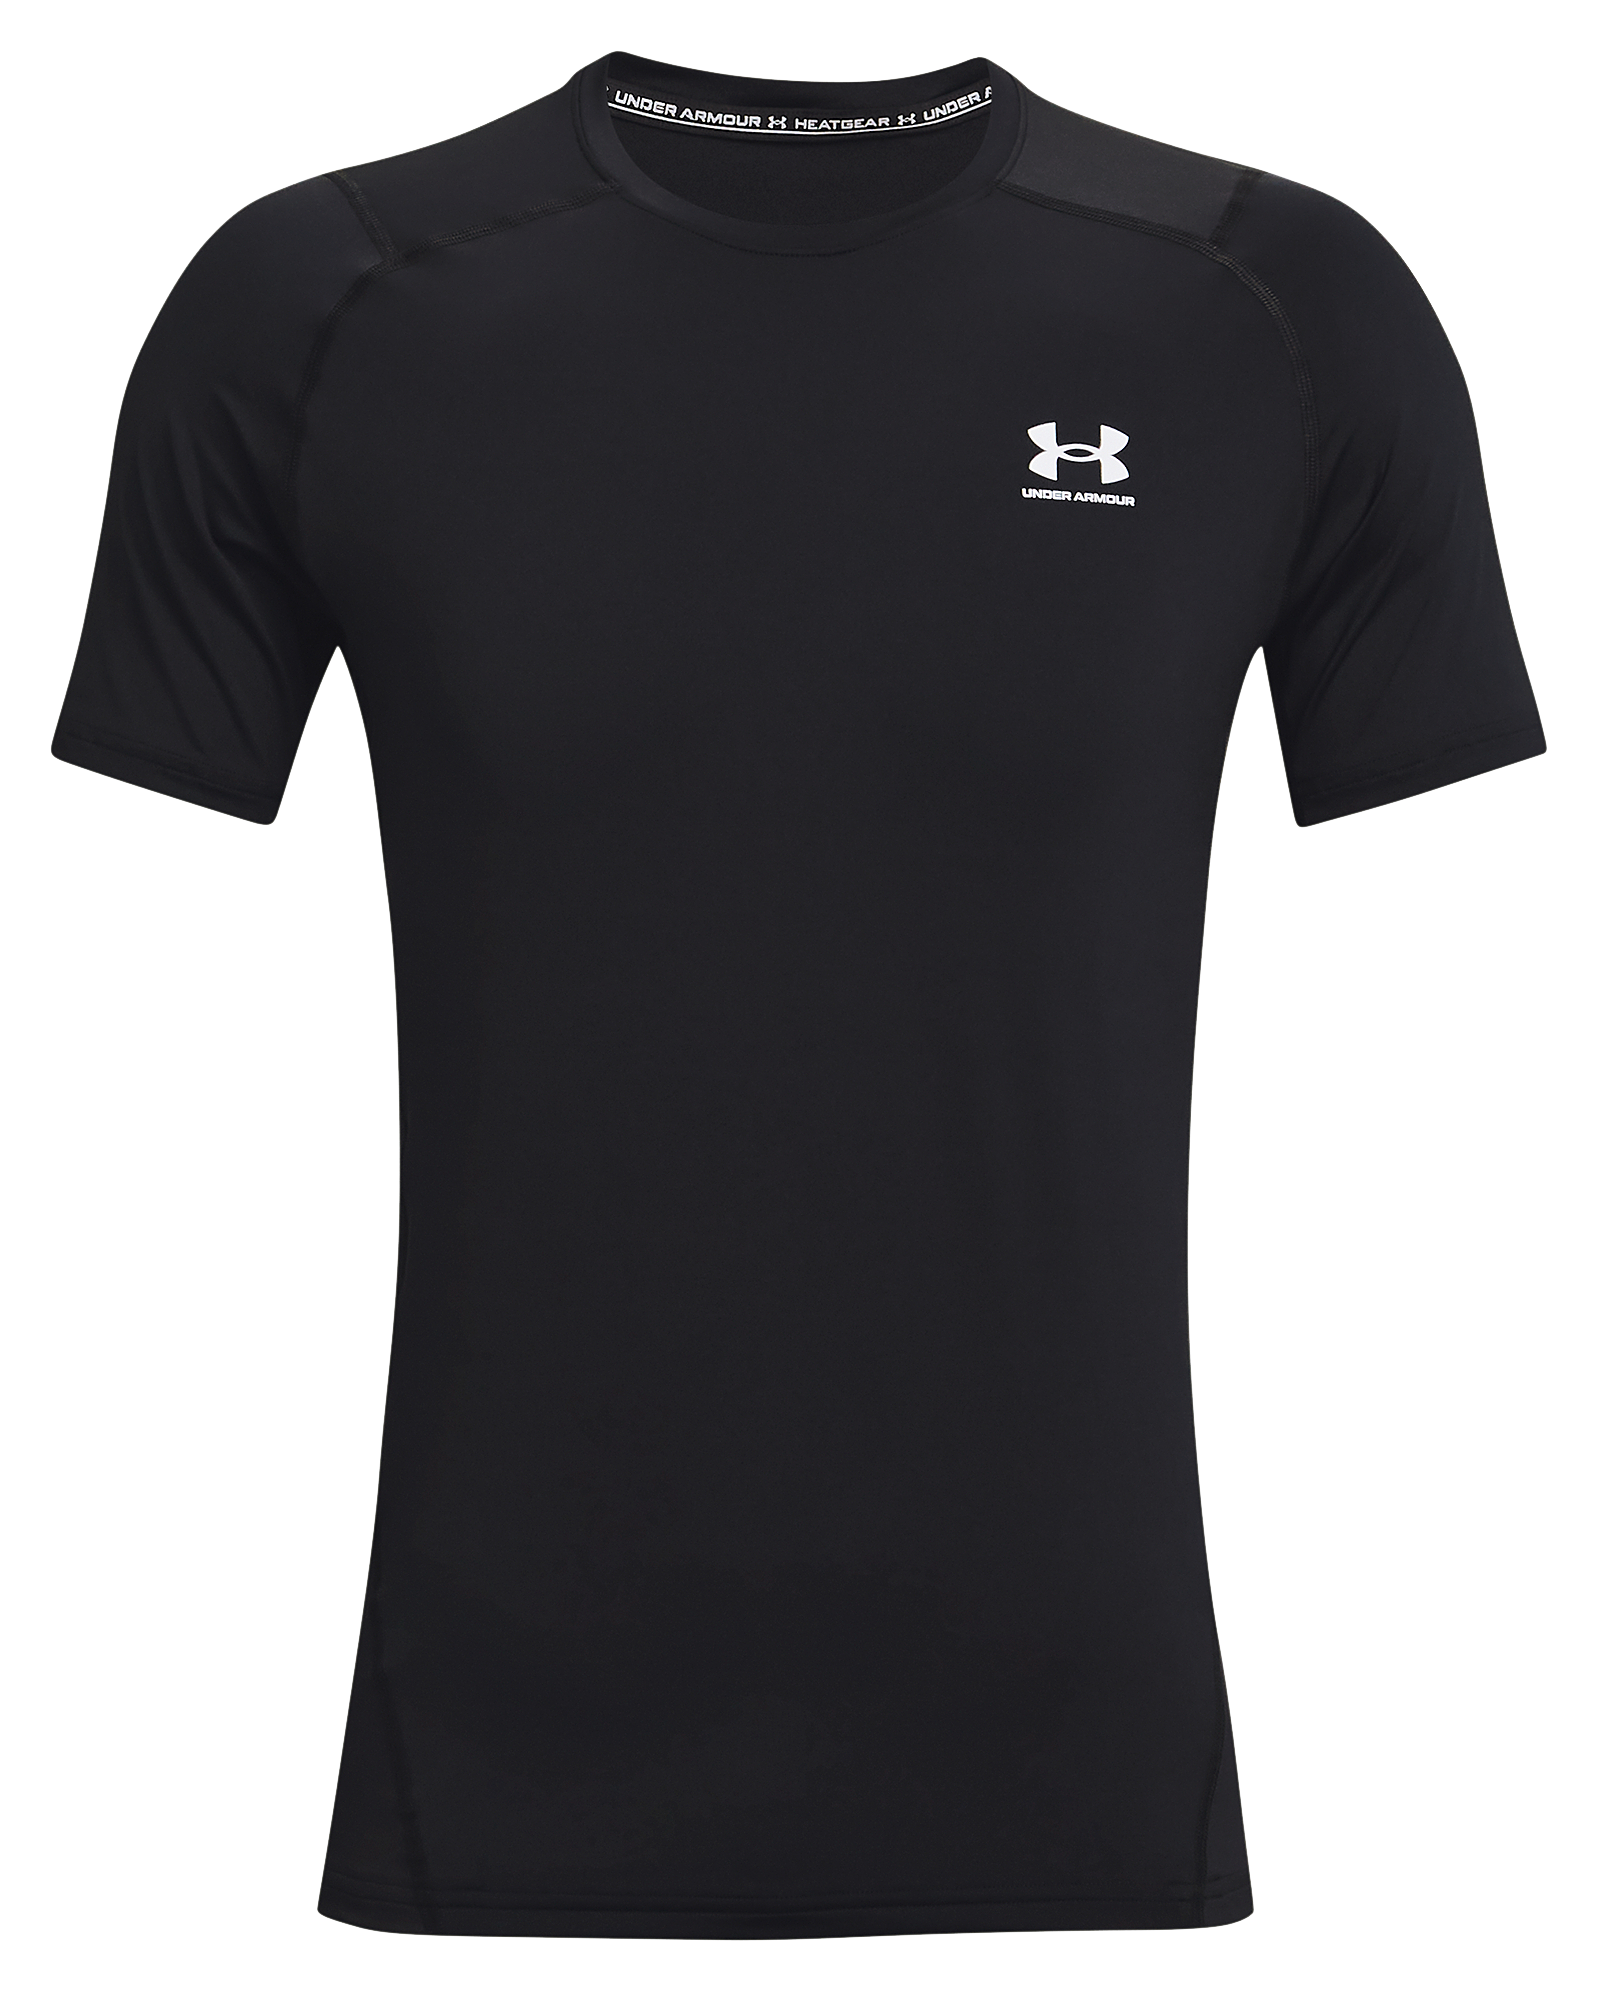 Under Armour HeatGear Fitted Short-Sleeve T-Shirt for Men - Black - XLT